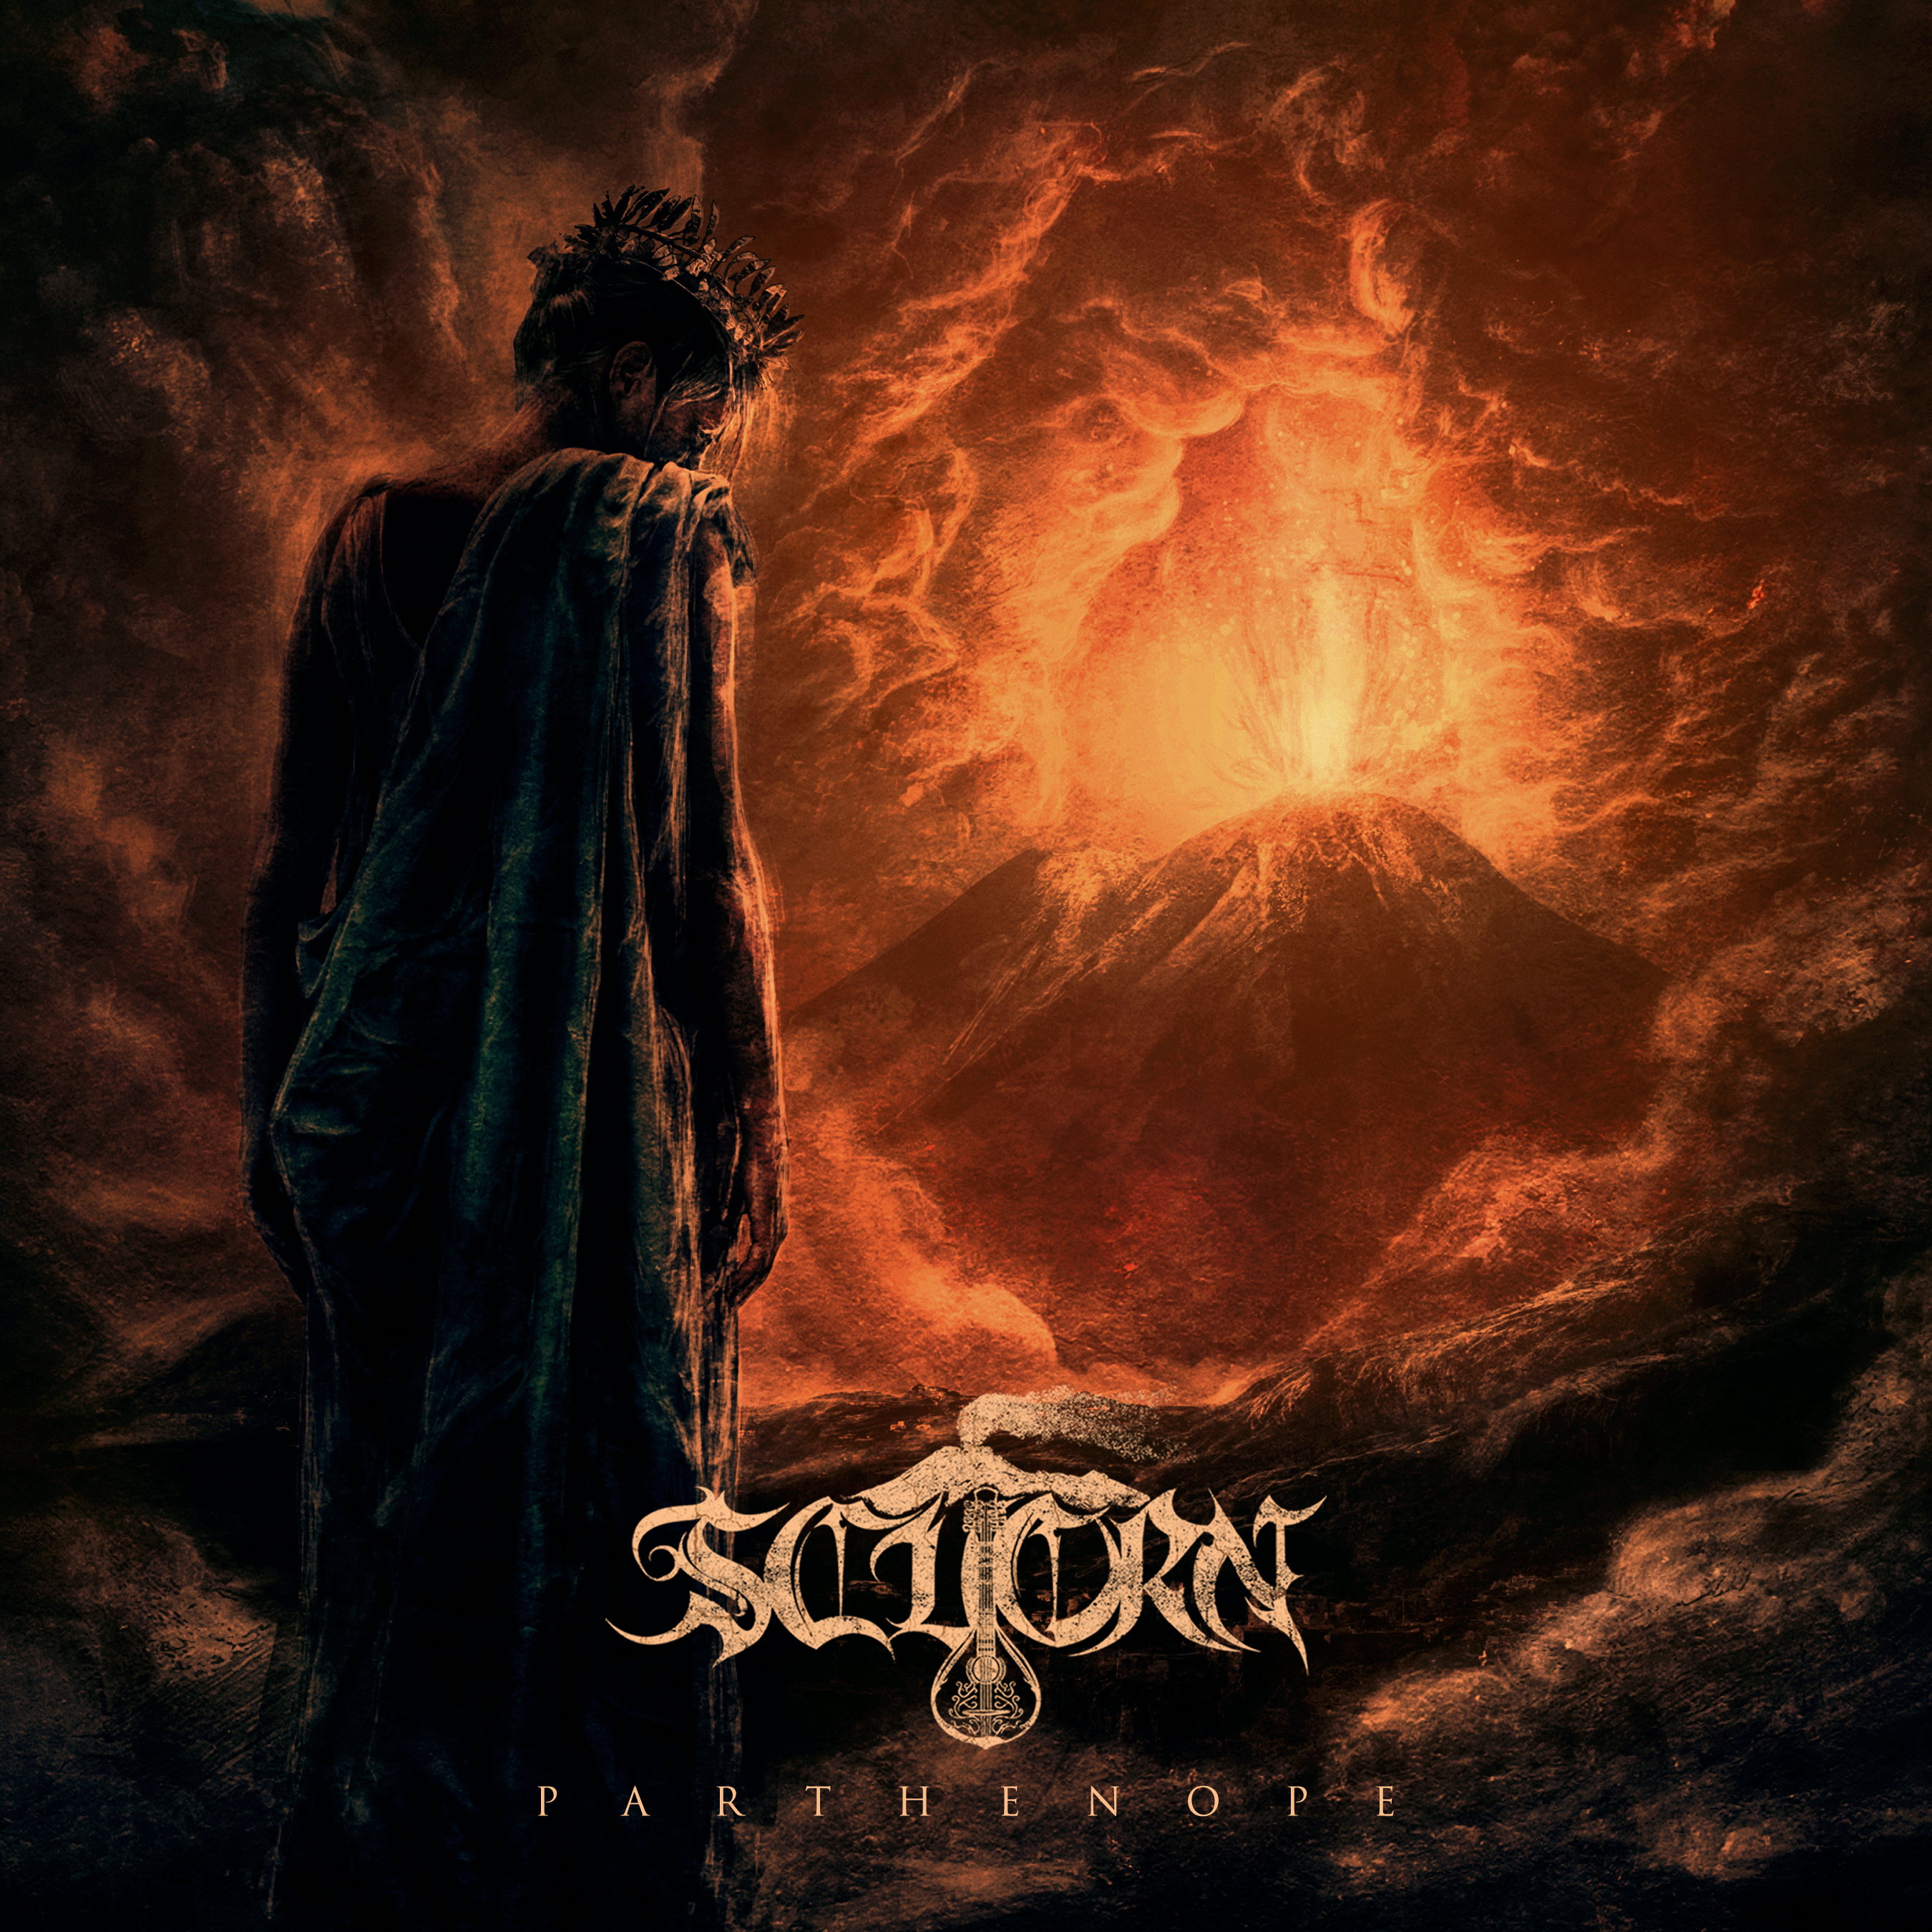 scuorn-parthenope-album-cover-2017-dusktone